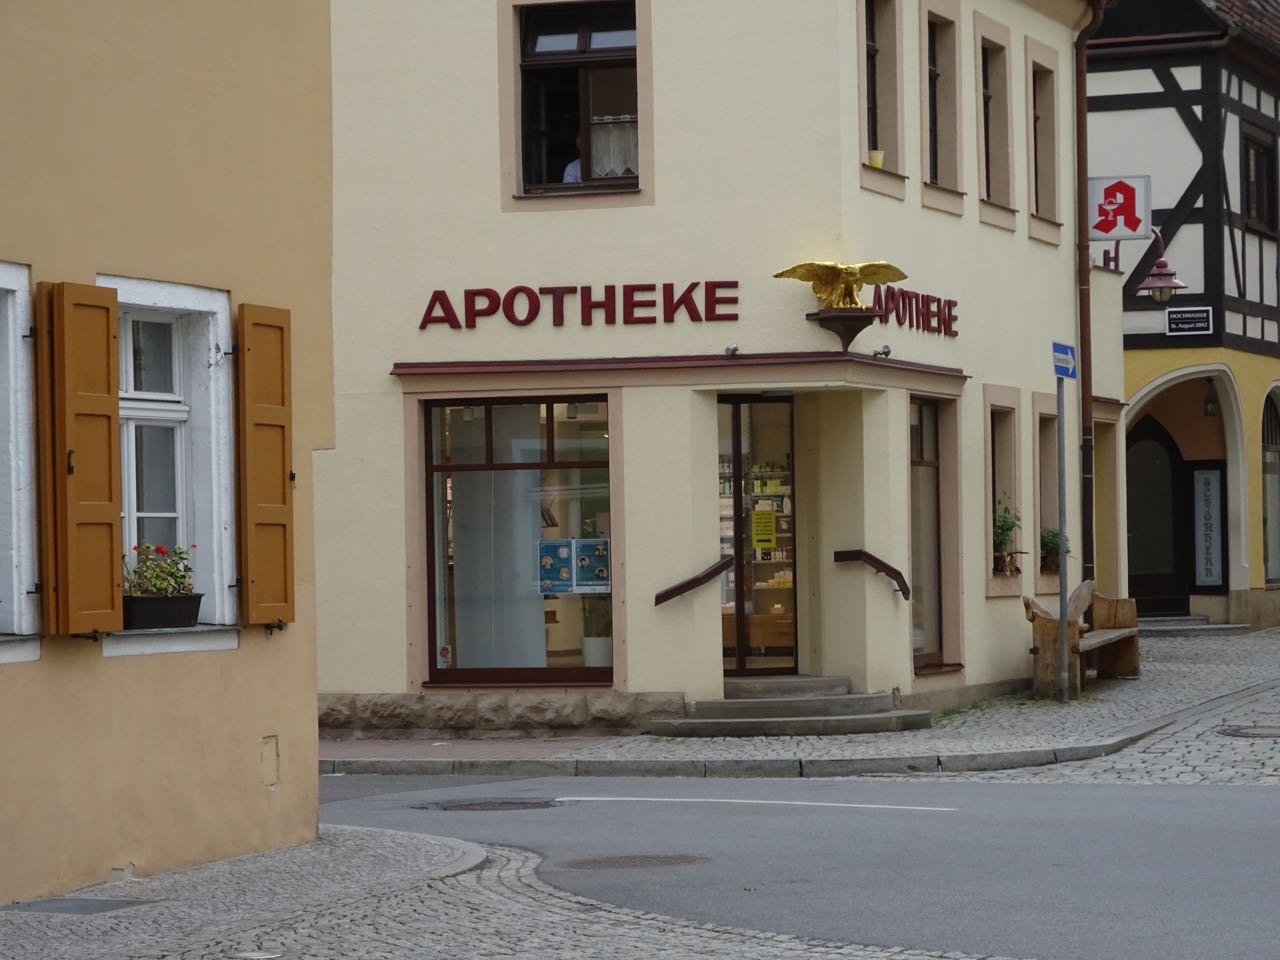 Adler-Apotheke in Bad Schandau